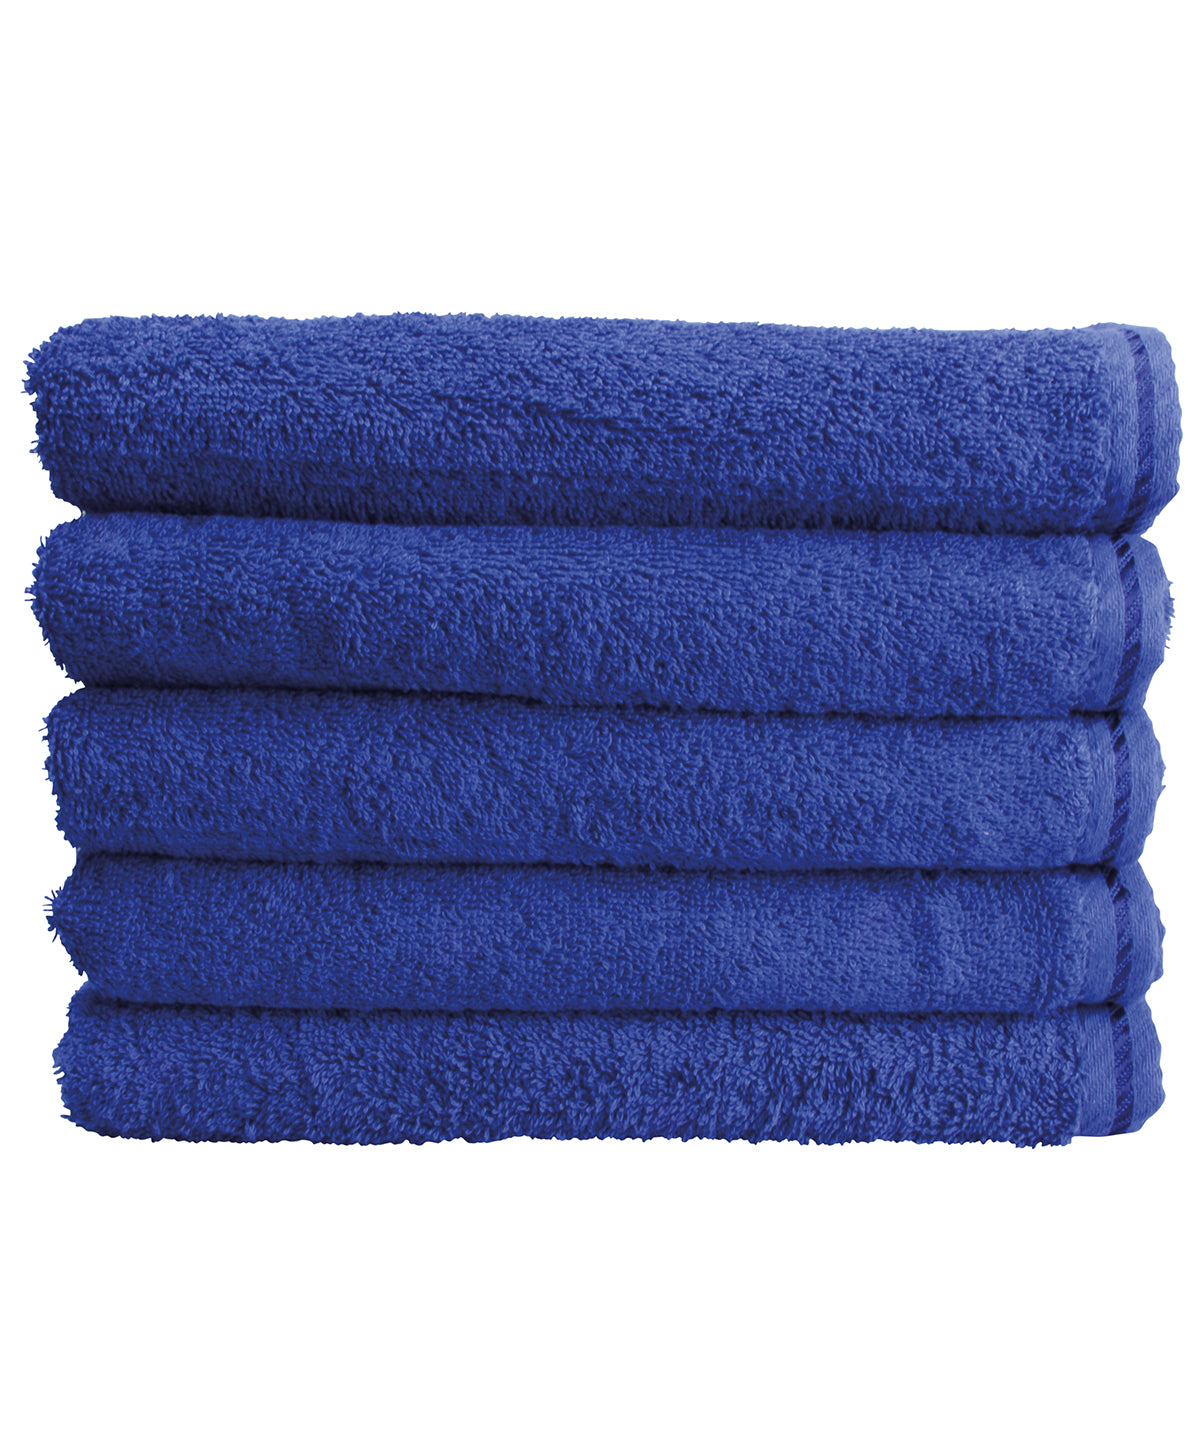 Personalised Towels - Mid Blue A&R Towels ARTG® Hand towel